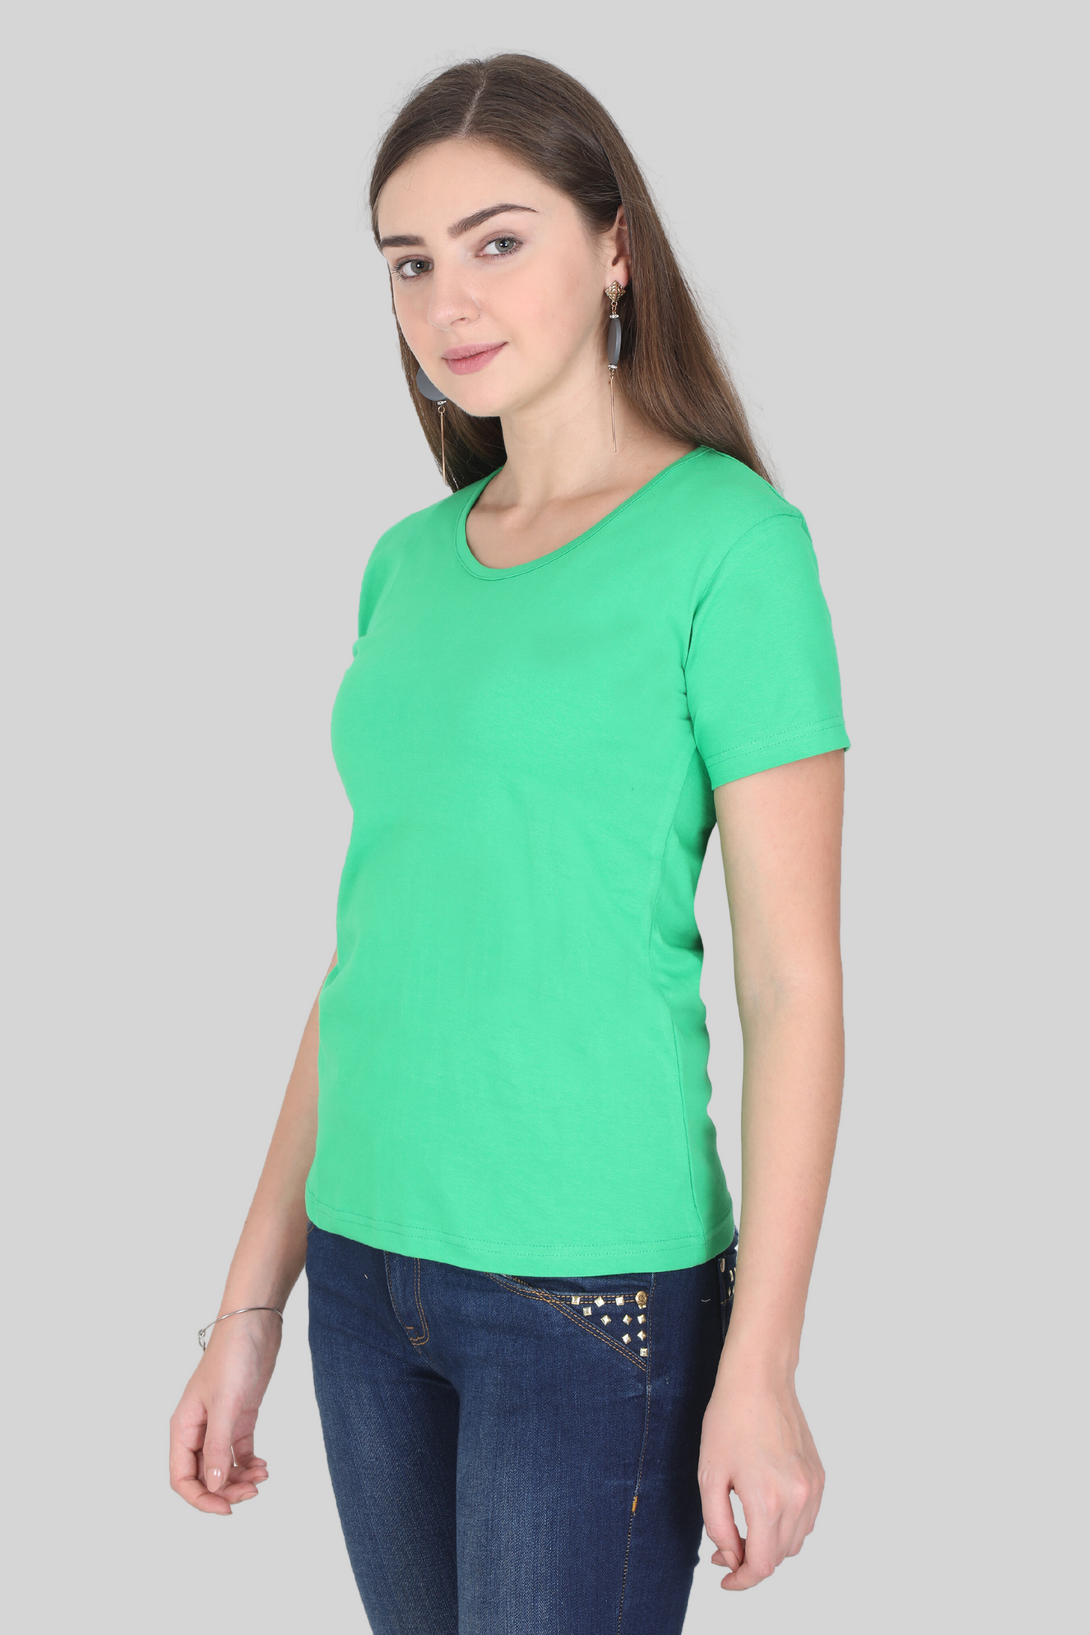 Flag Green Scoop Neck T-Shirt For Women - WowWaves - 2